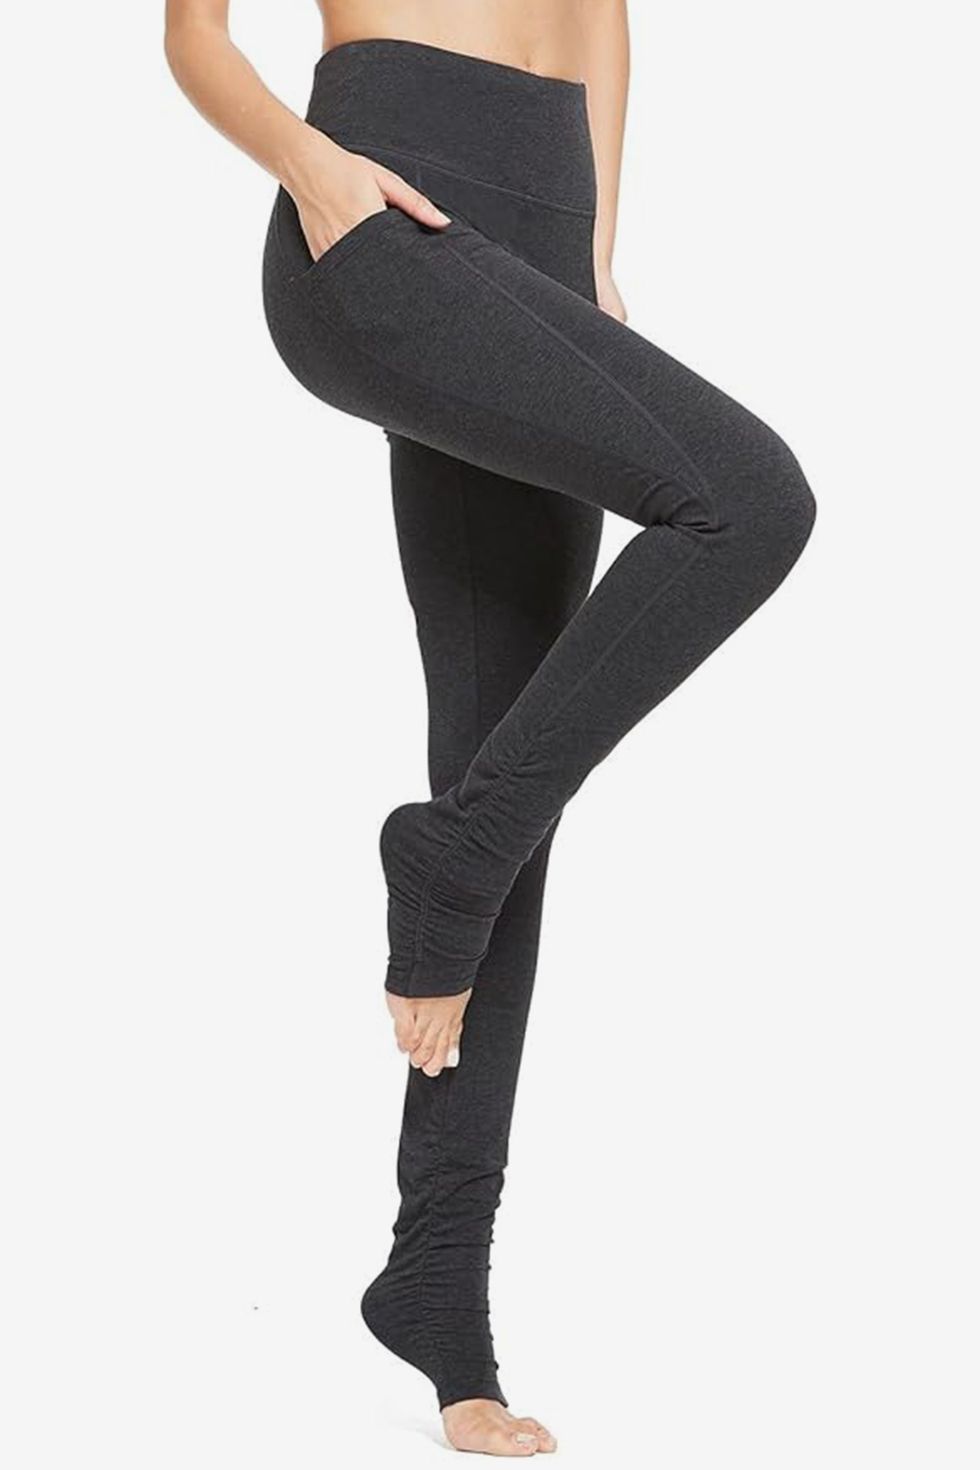 Crazy Yoga Leggings, Fleece Lined Leggings Thermal High Waist Tummy  Control Yoga Pants